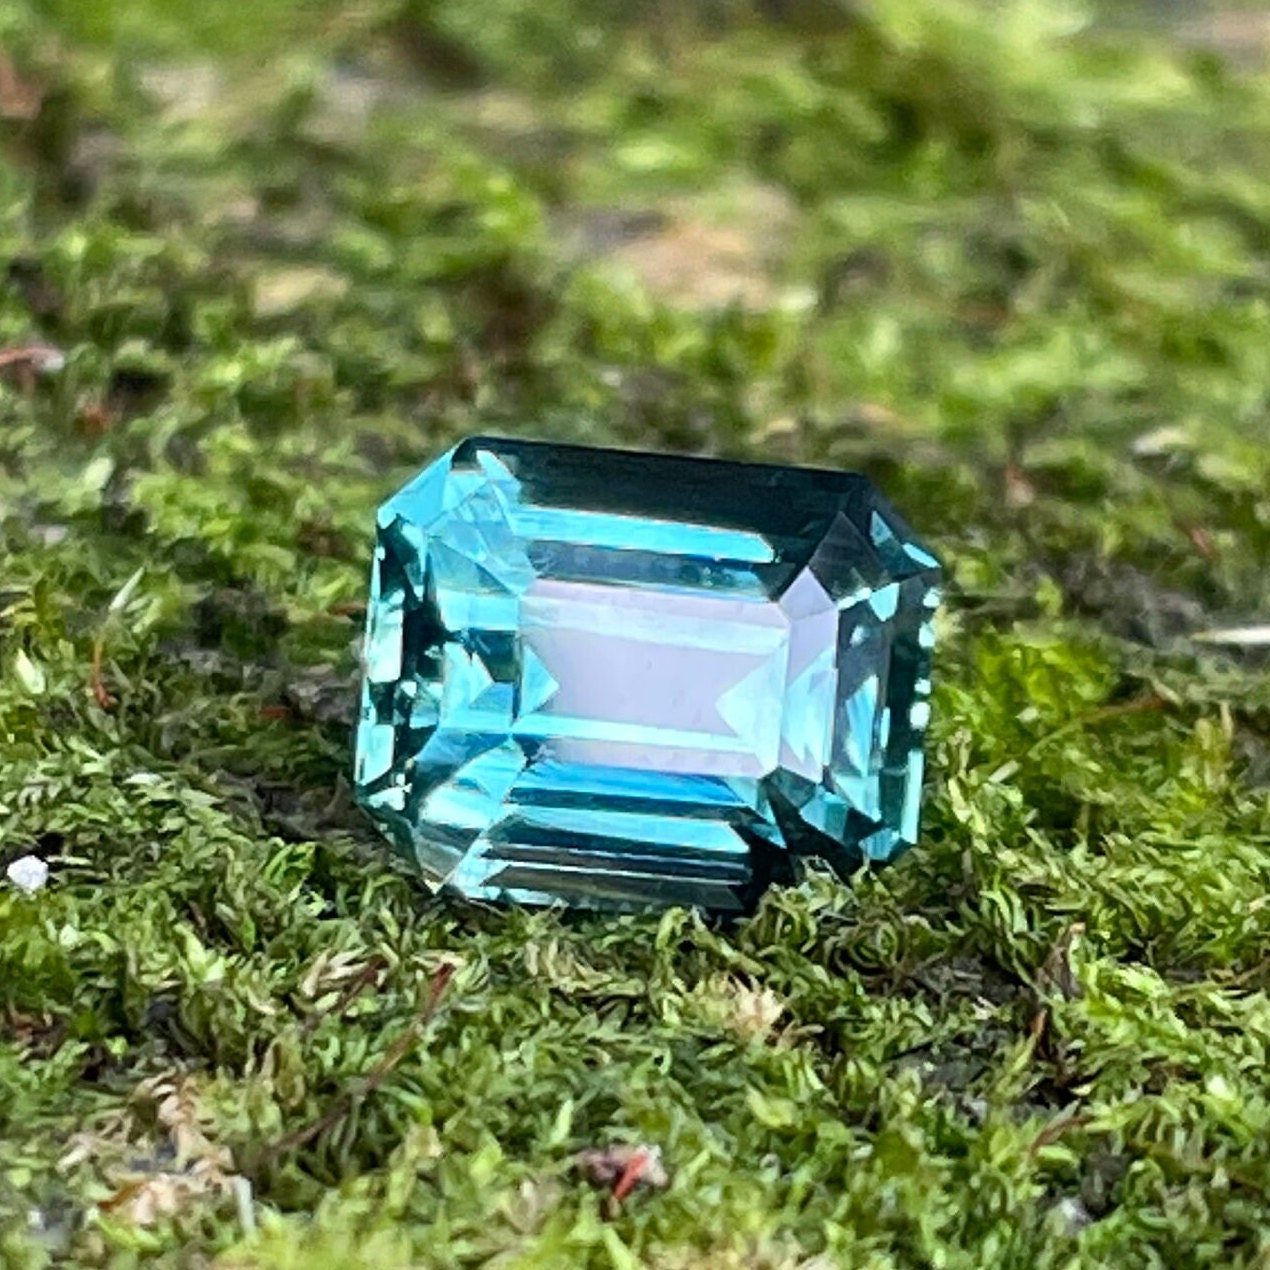 Teal Sapphire l 3.23 Ct l Emerald l 8.8x6.6x5.1 l Madagascar l Loupe Clean l Sapphire Engagement Ring l Natural Sapphires